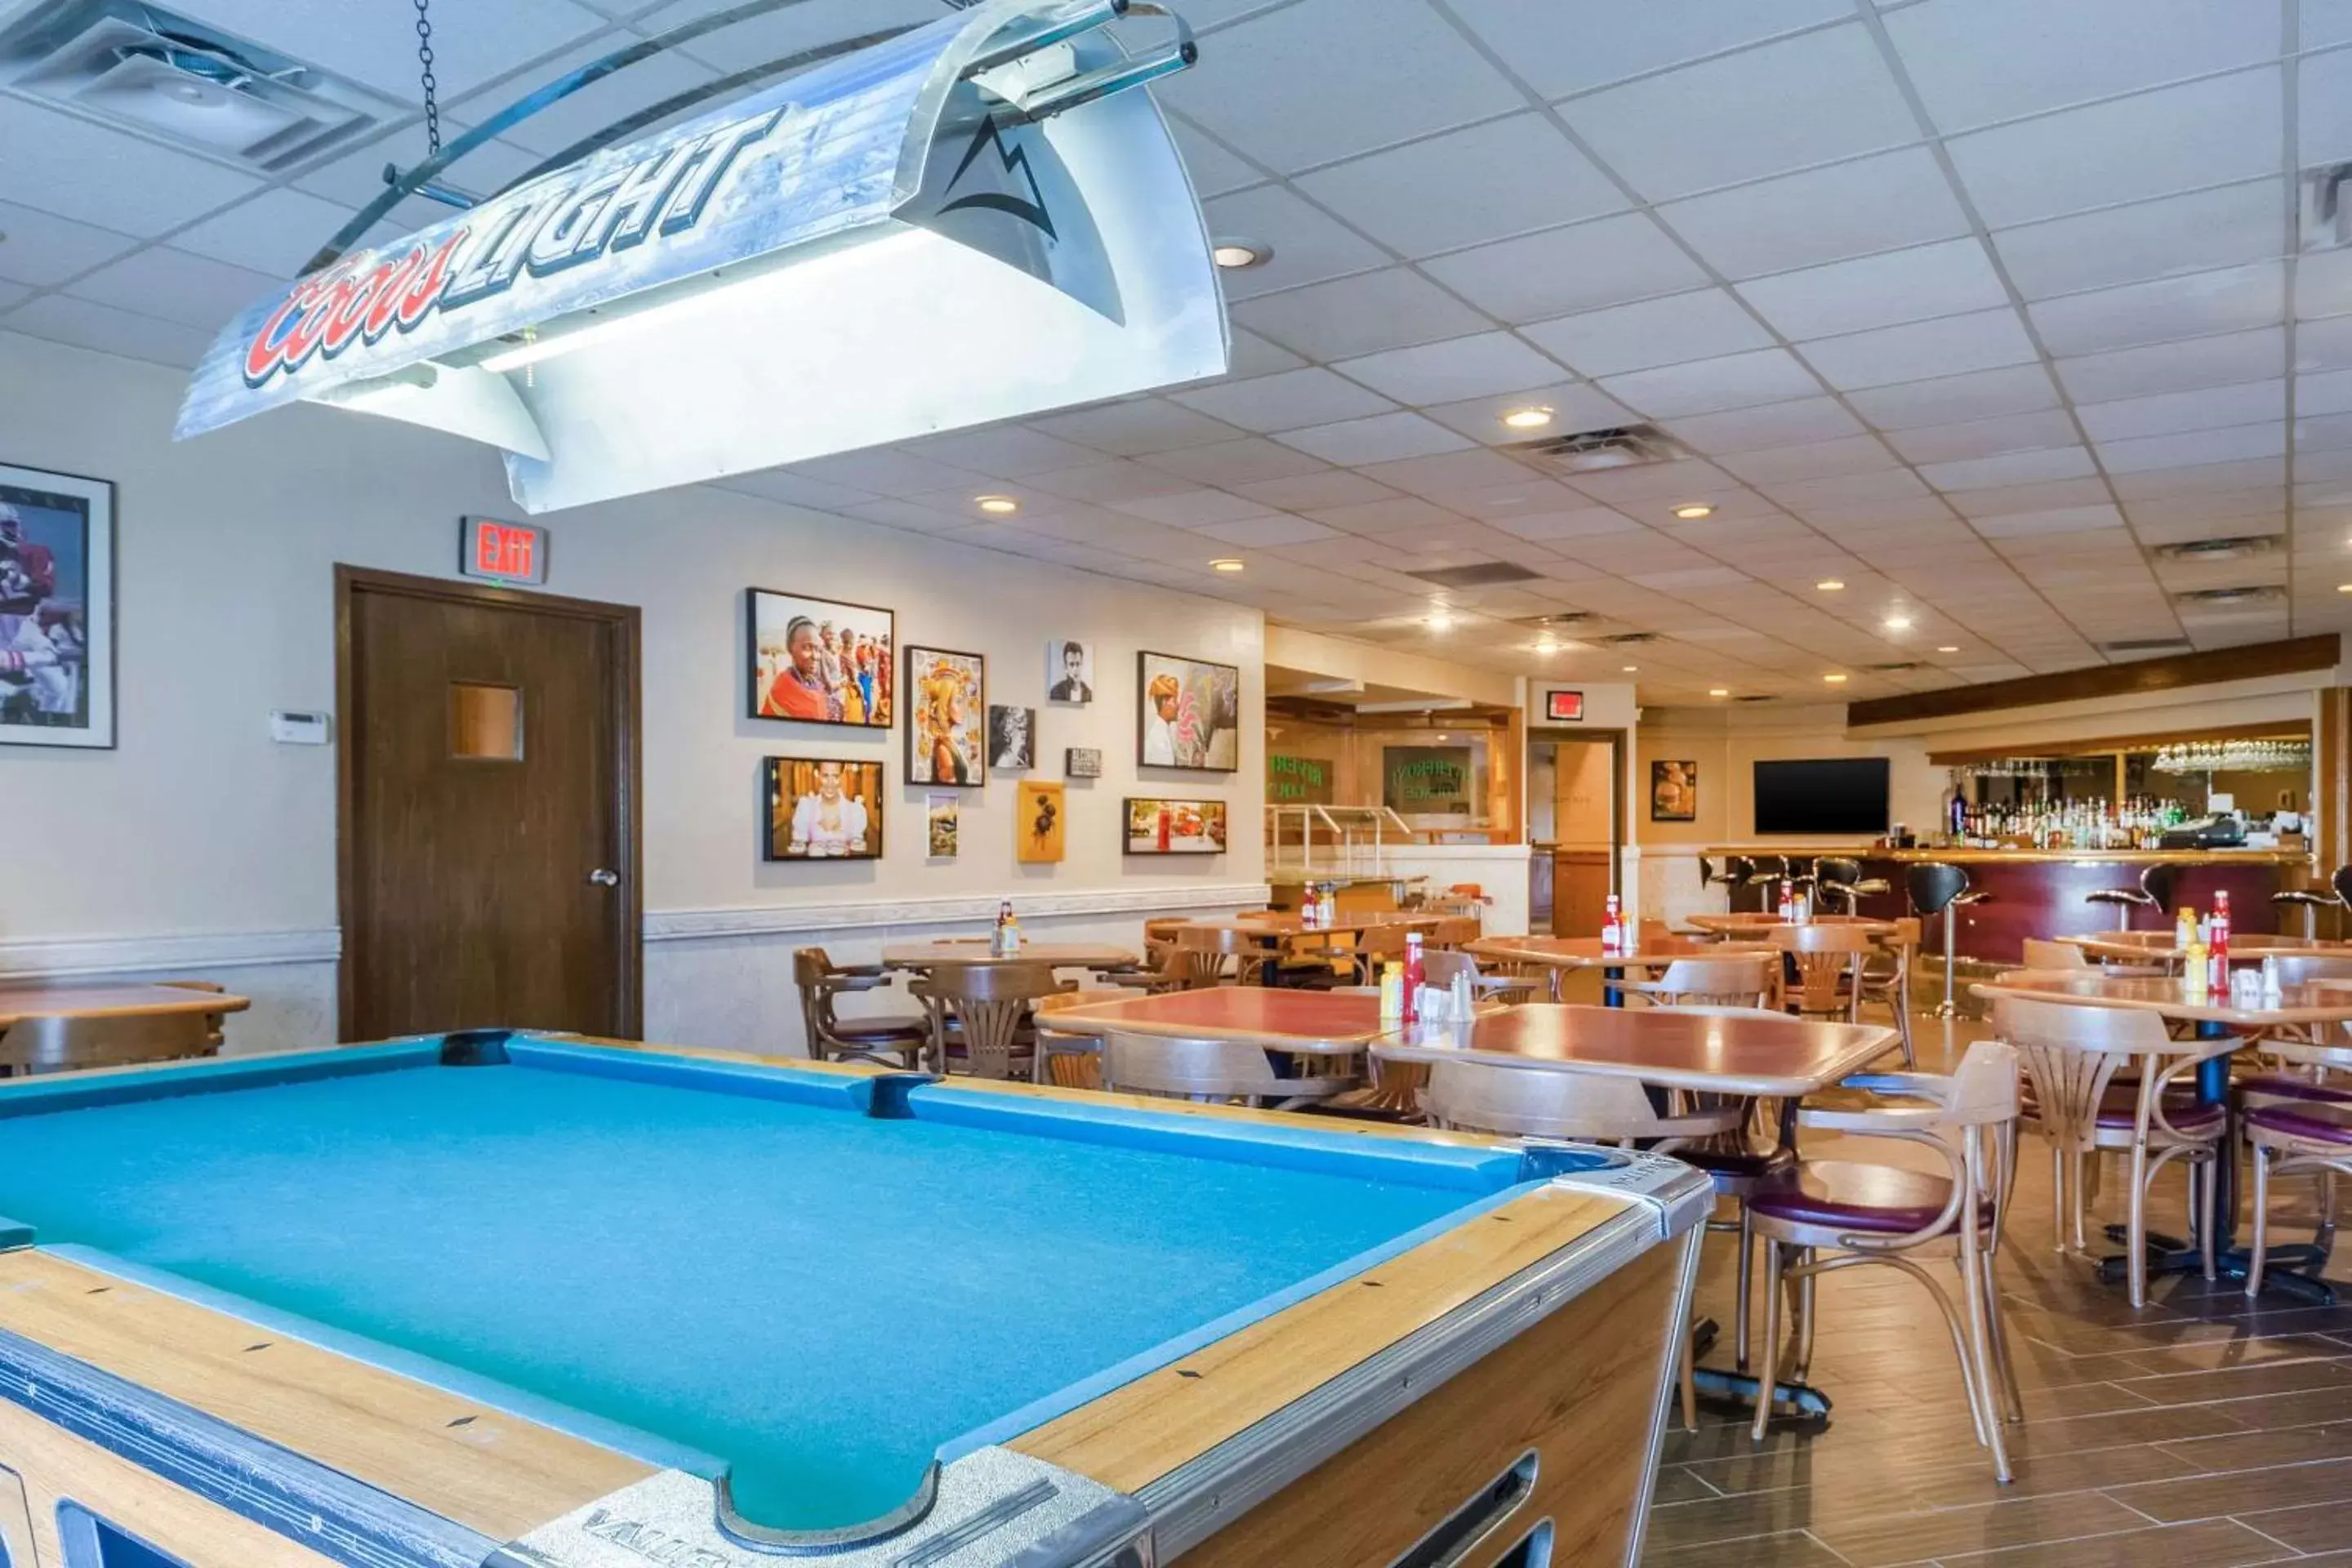 Restaurant/places to eat, Billiards in Suburban Studios I-80 Grand Island